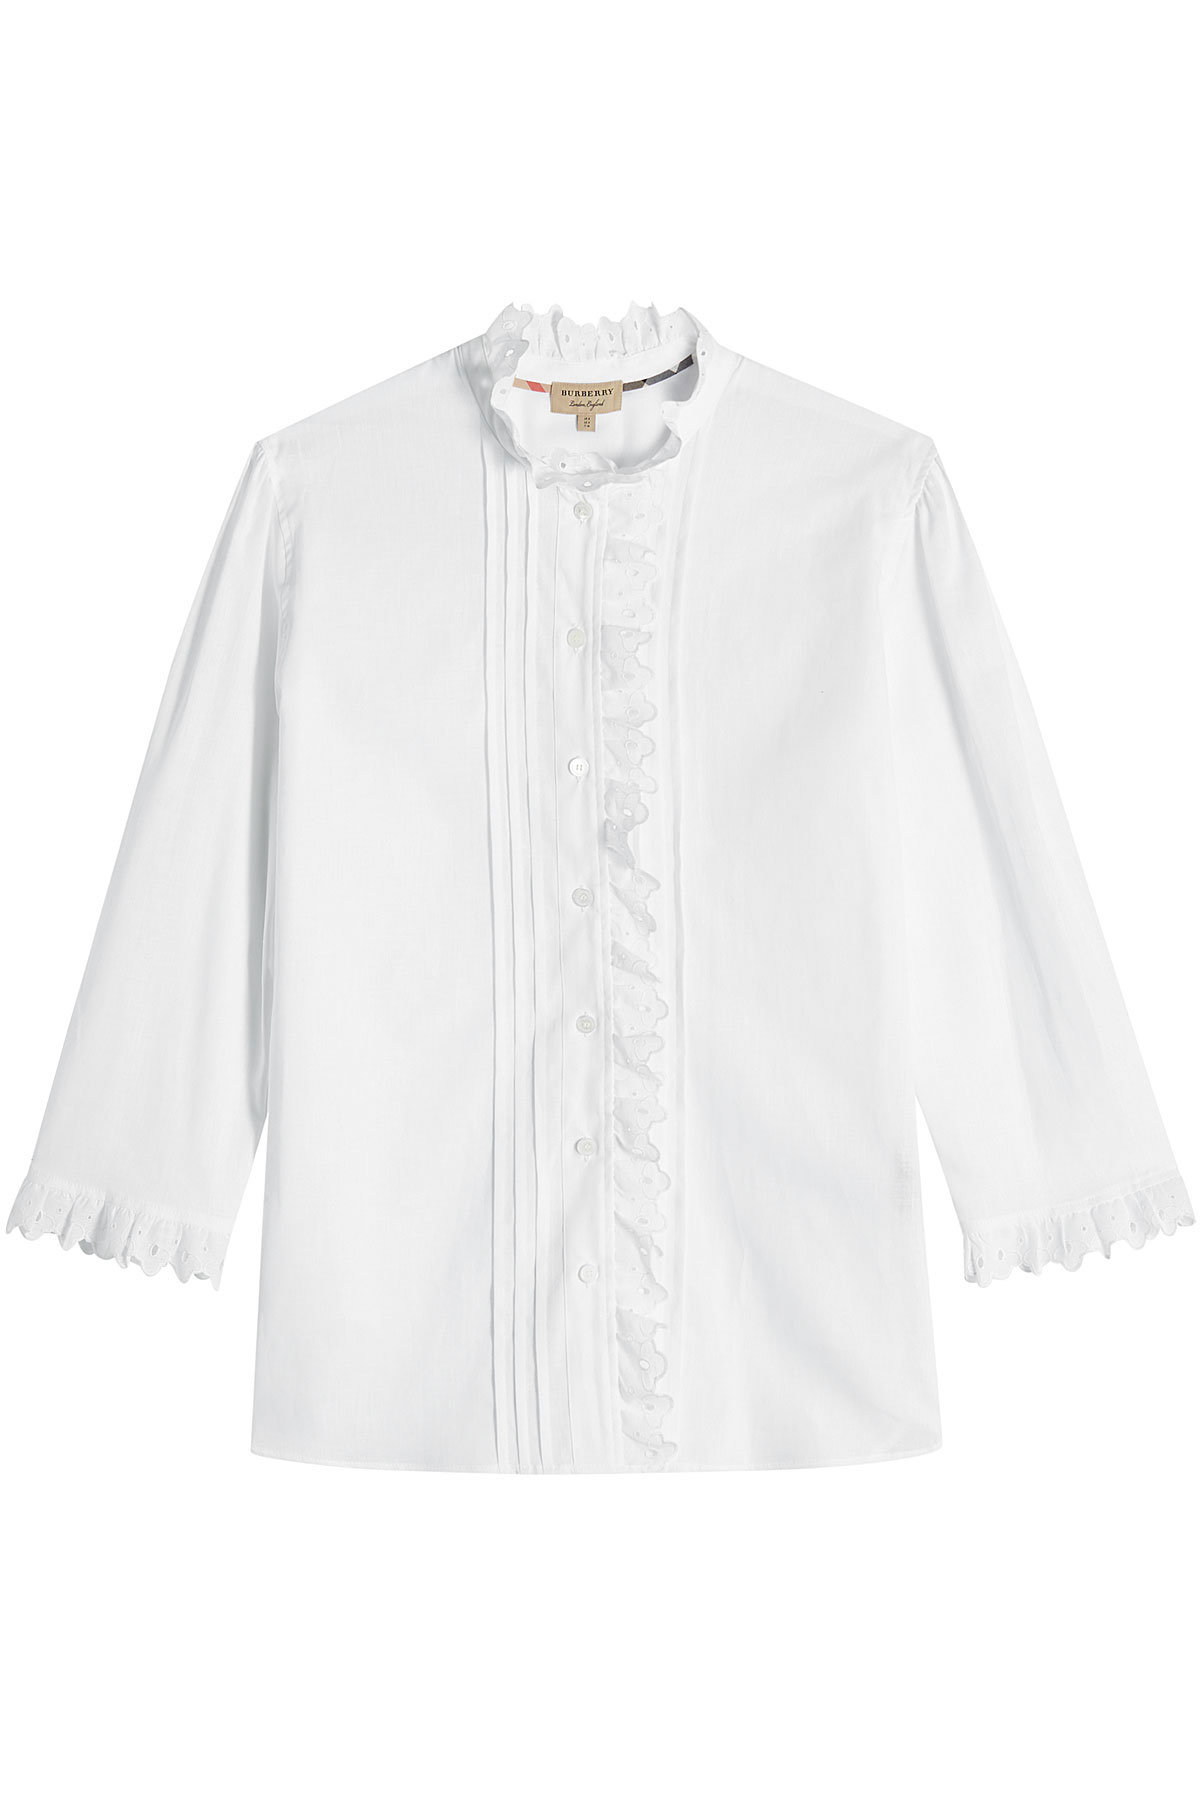 Burberry - Linen and Cotton Shirt